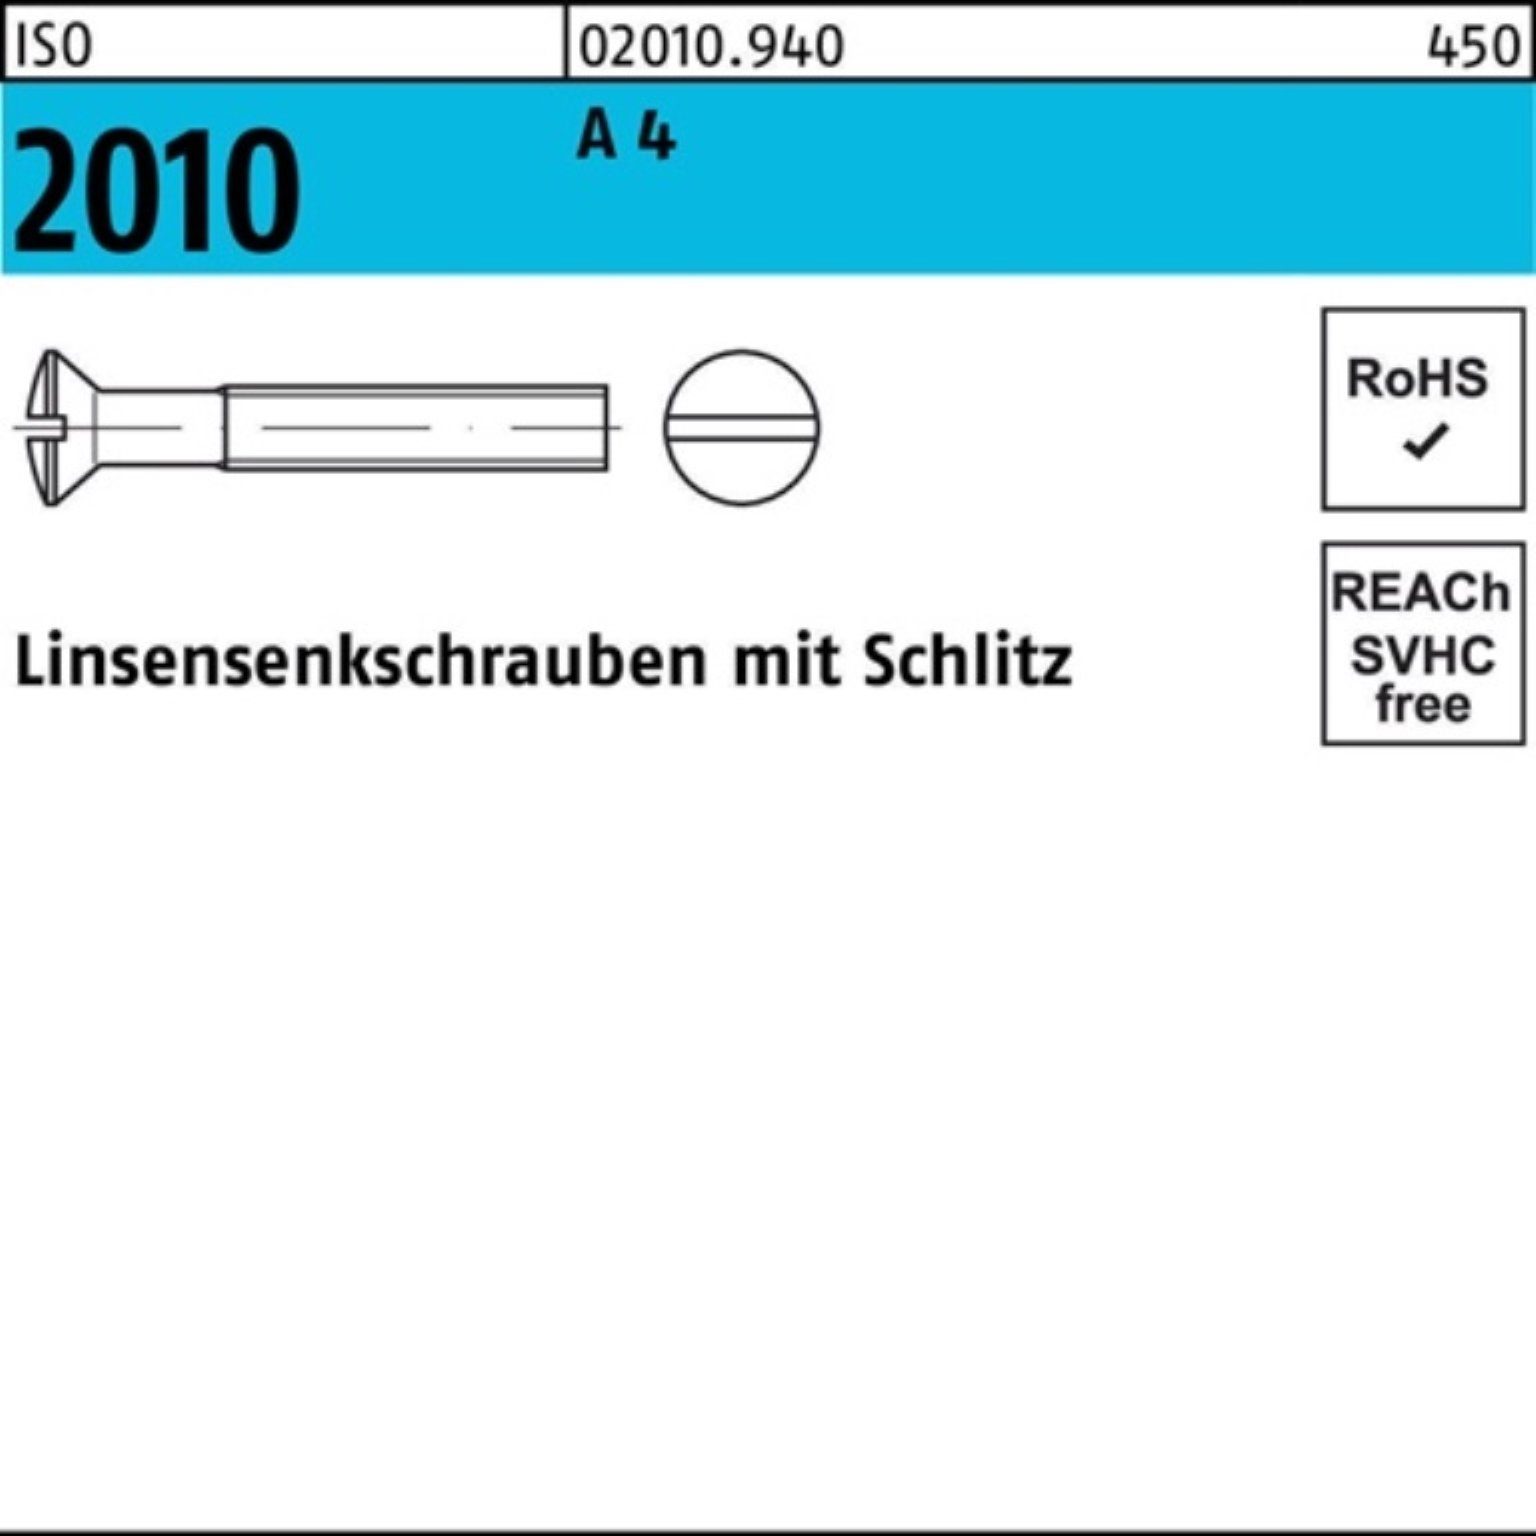 Reyher Linsenschraube M6x 100er 12 Schlitz ISO I Stück A 4 2010 Pack 100 Linsensenkschraube